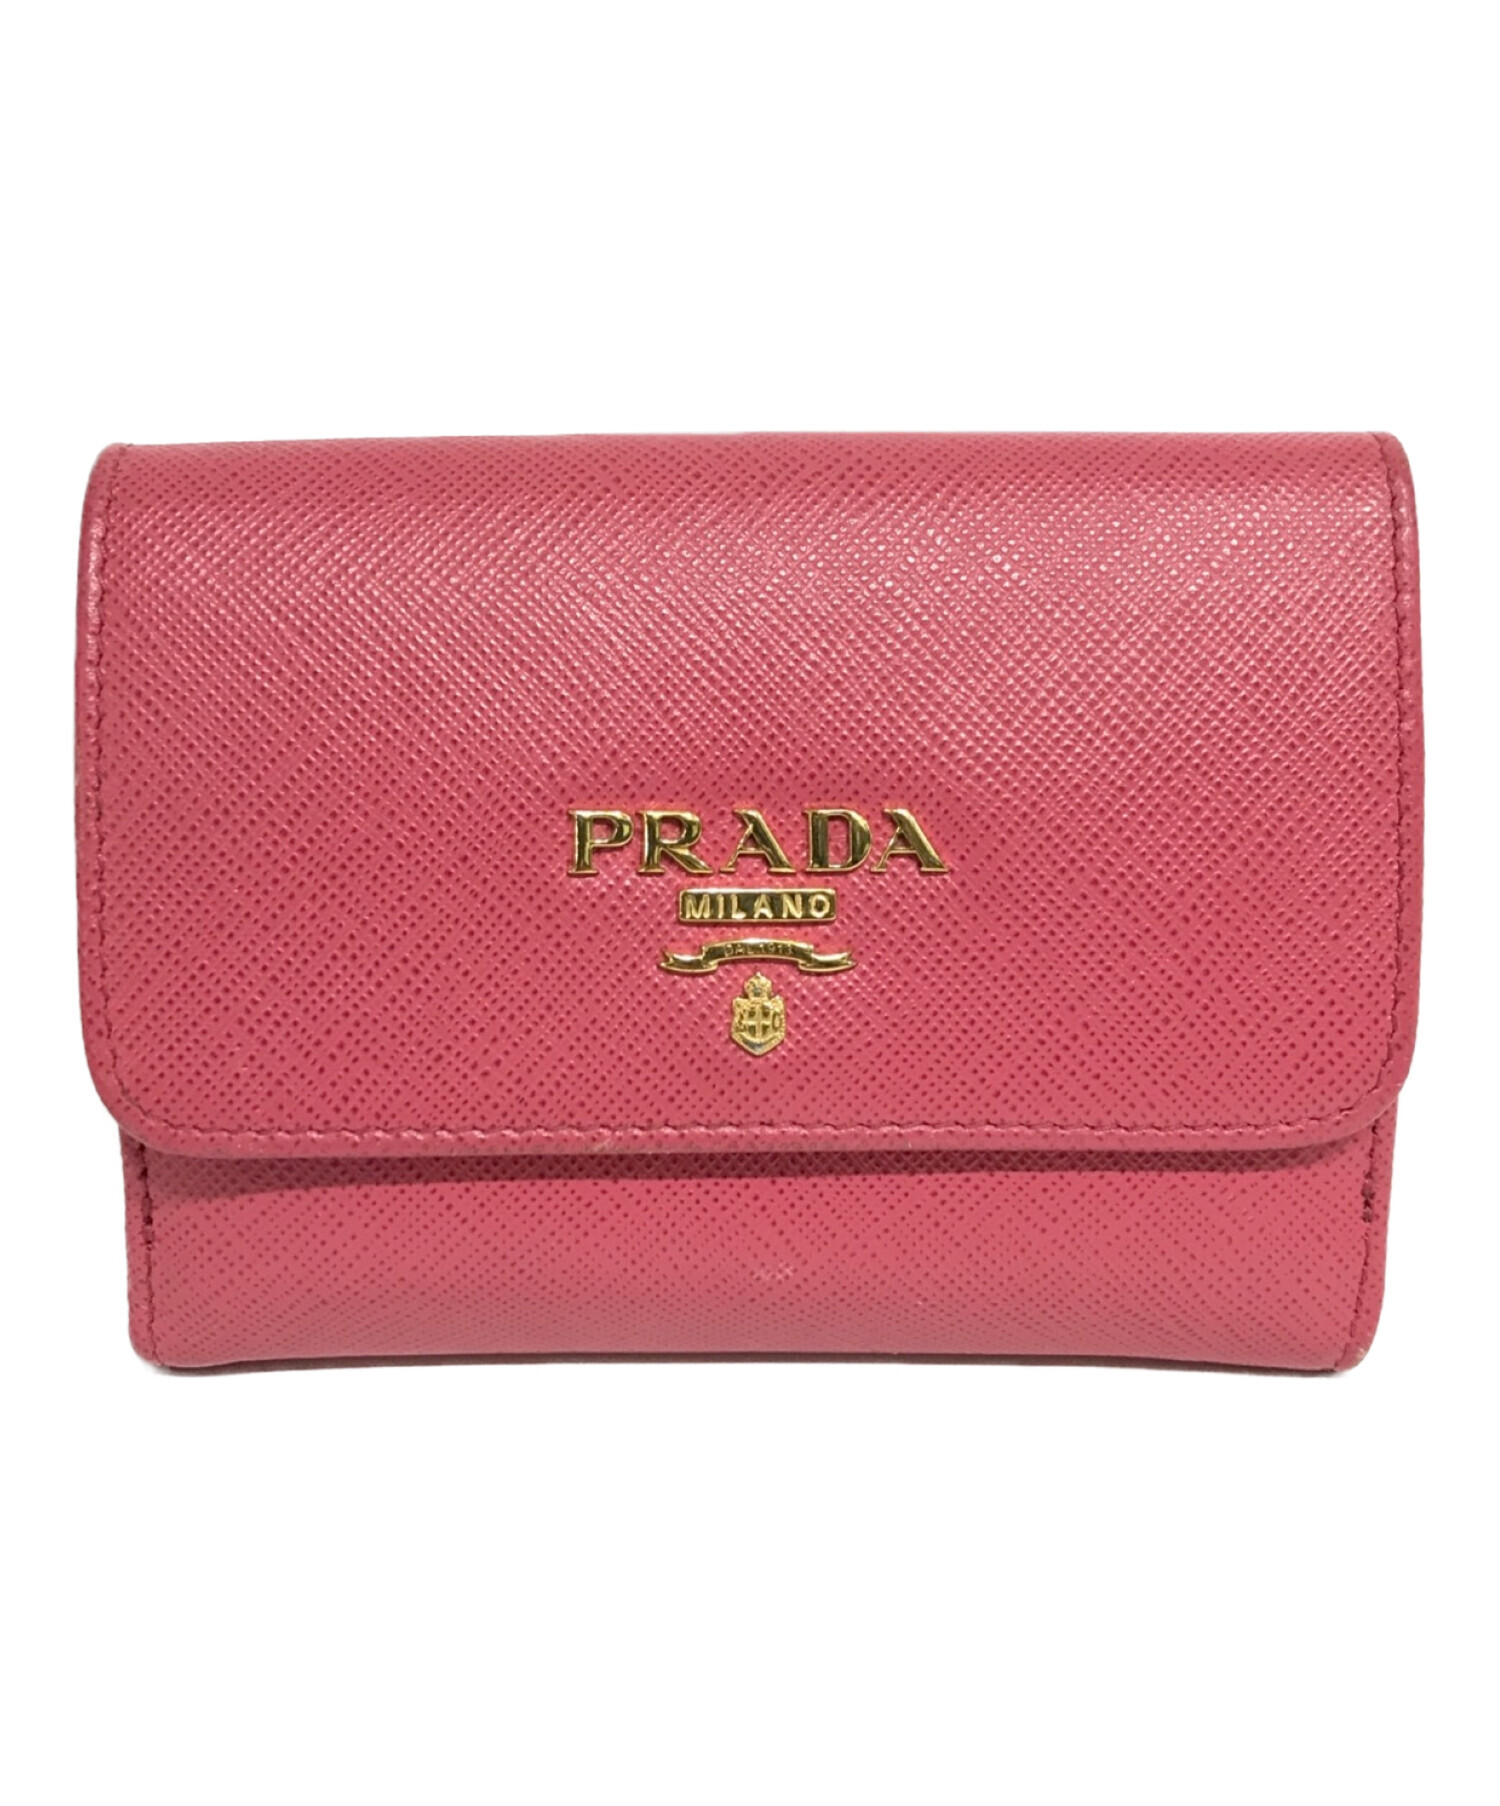 PRADA (プラダ) Wホック二つ折り財布 ピンク